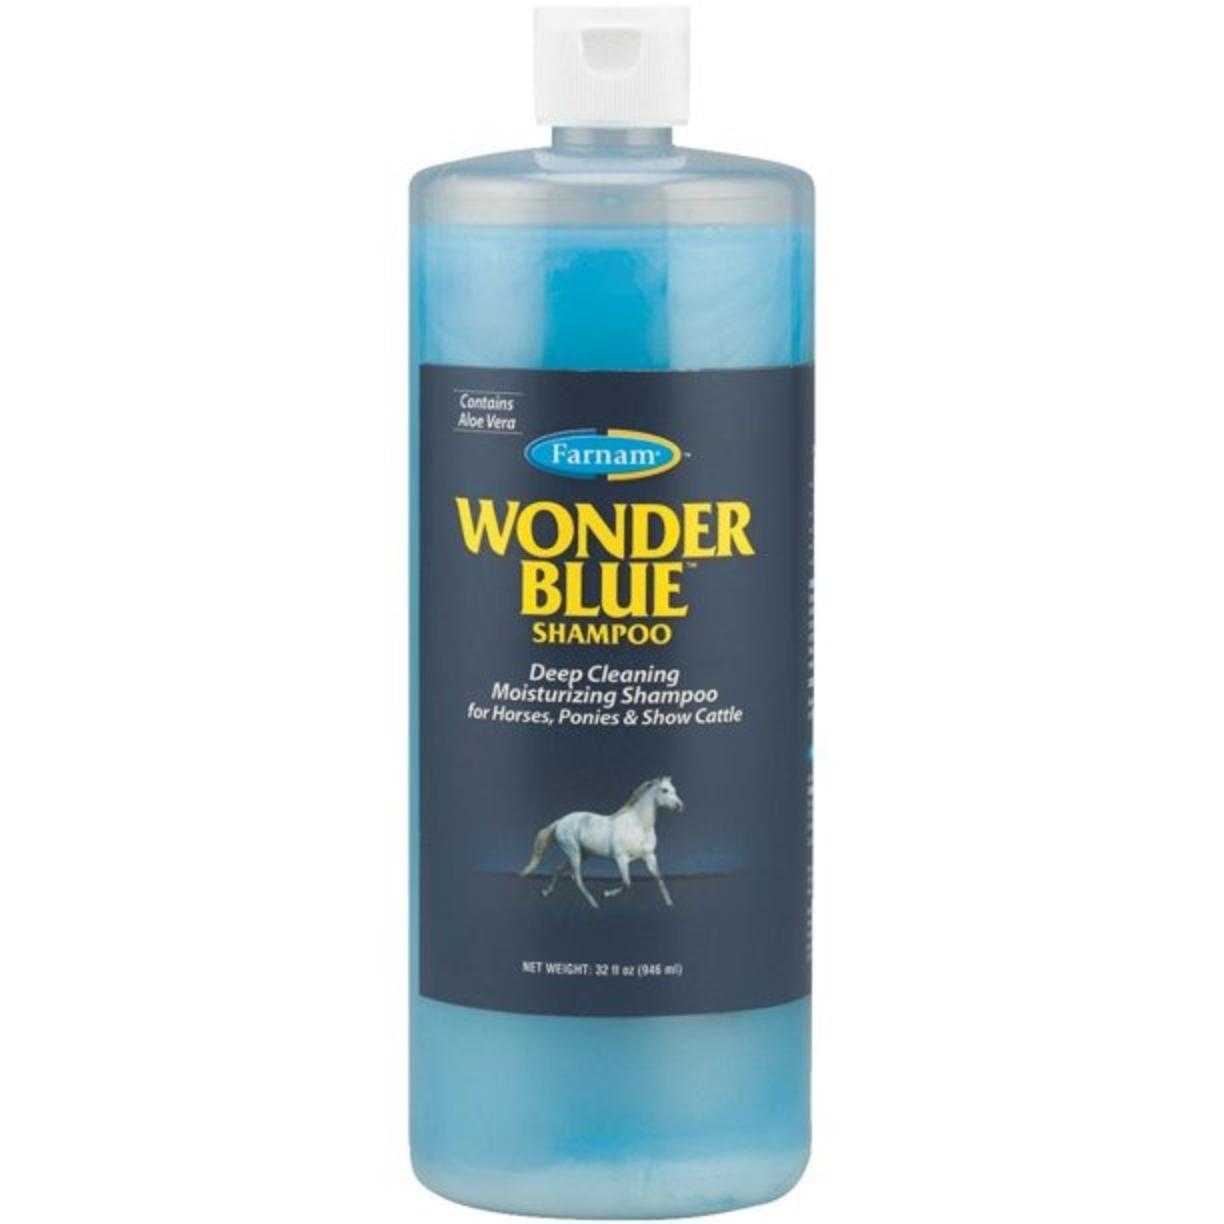 Farnam Wonder Blue Deep-Cleaning Moisturizing Shampoo